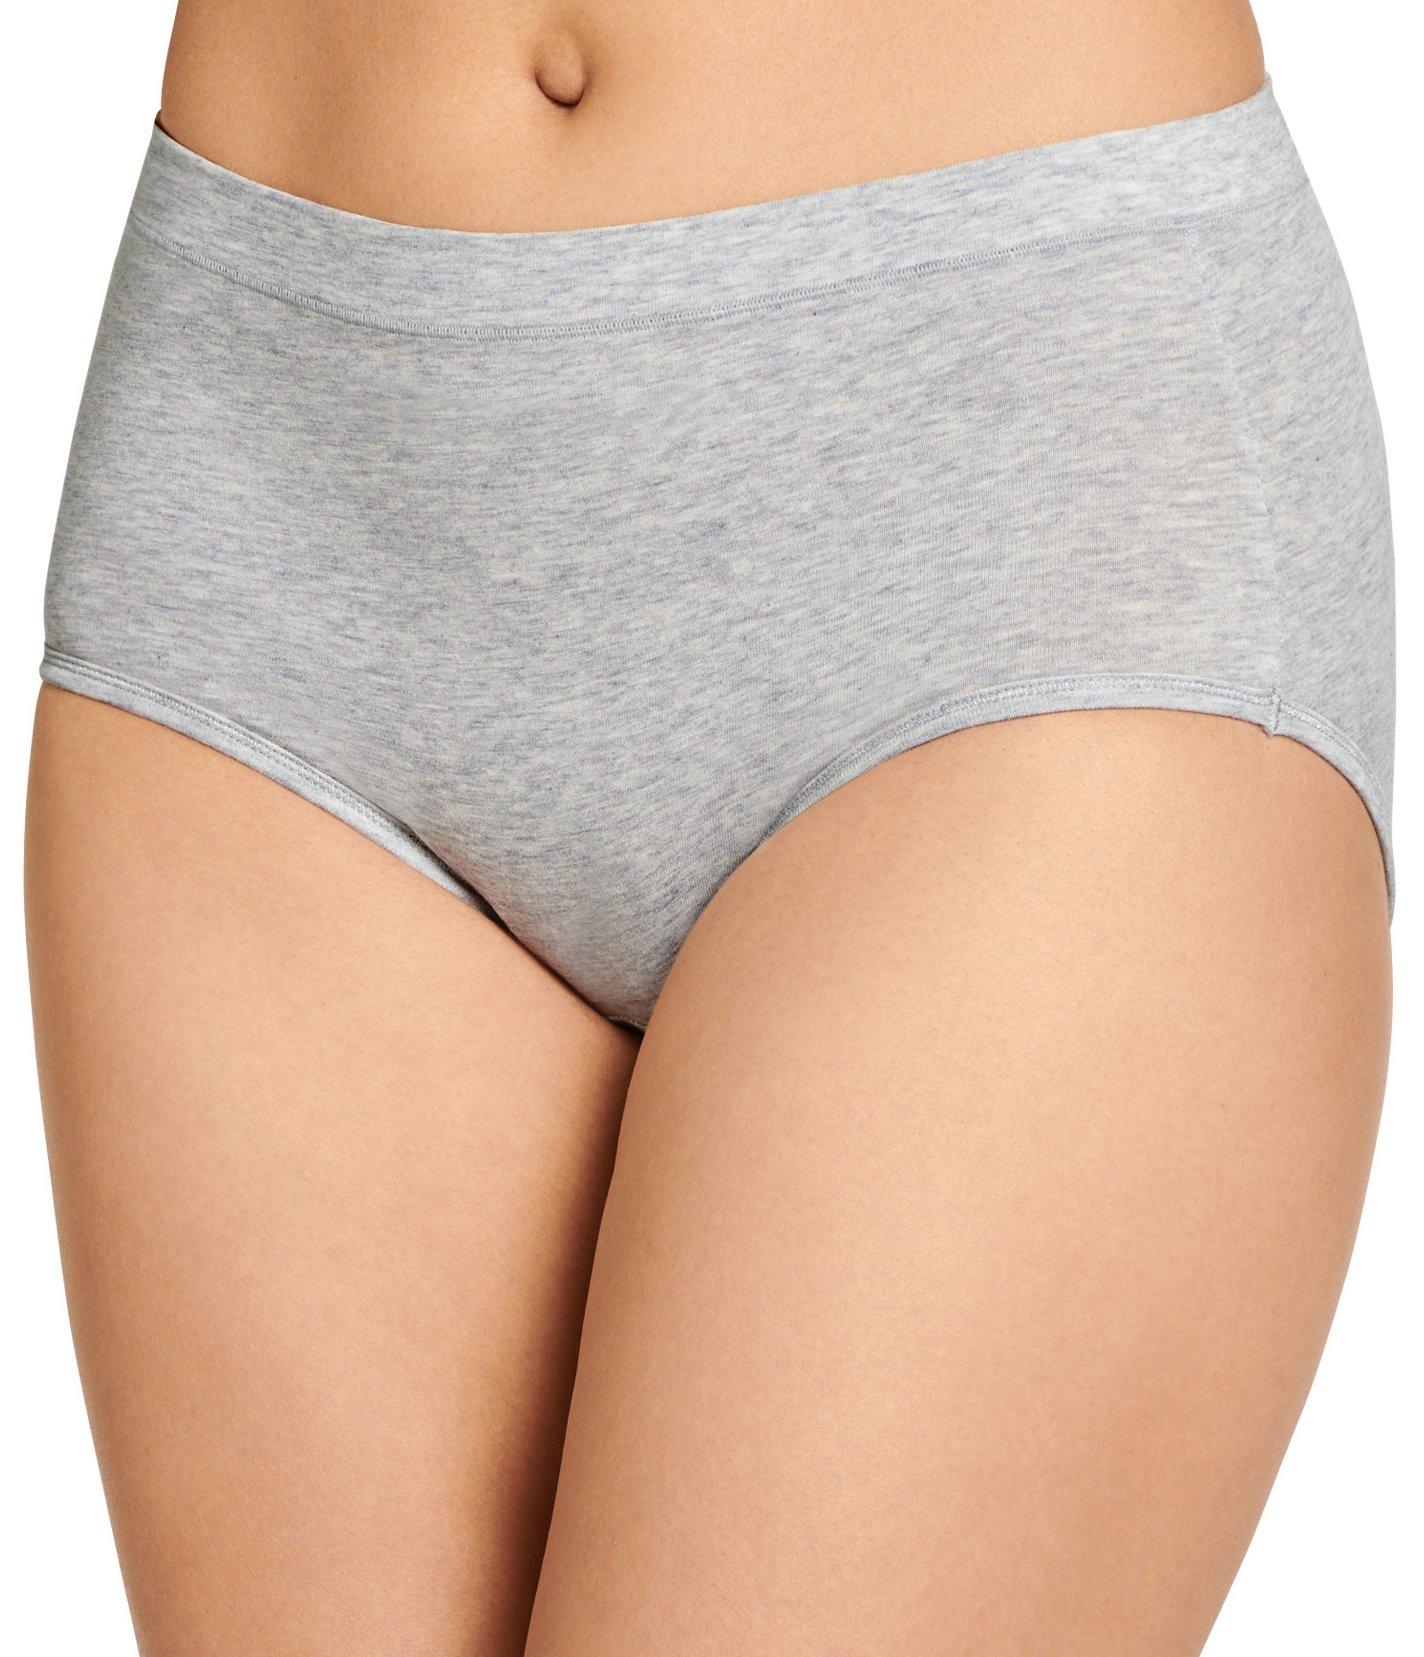 Buy Jockey Assorted Cotton Printed Bikini Panties Pack Of 4 on Snapdeal